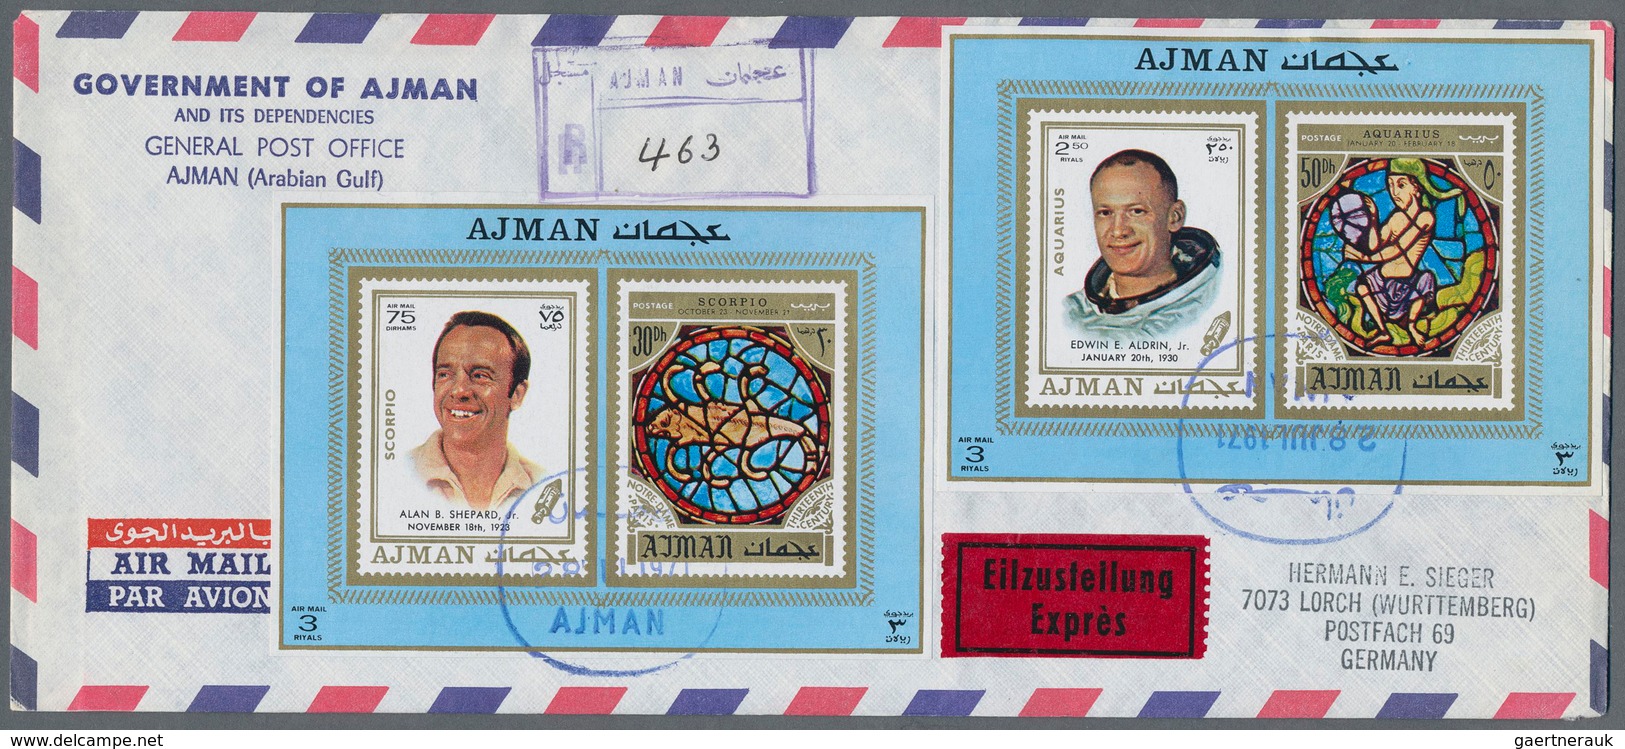 Thematik: Raumfahrt / astronautics: 1969/1973, Ajman/Fujeira, group of 18 covers (registered airmail